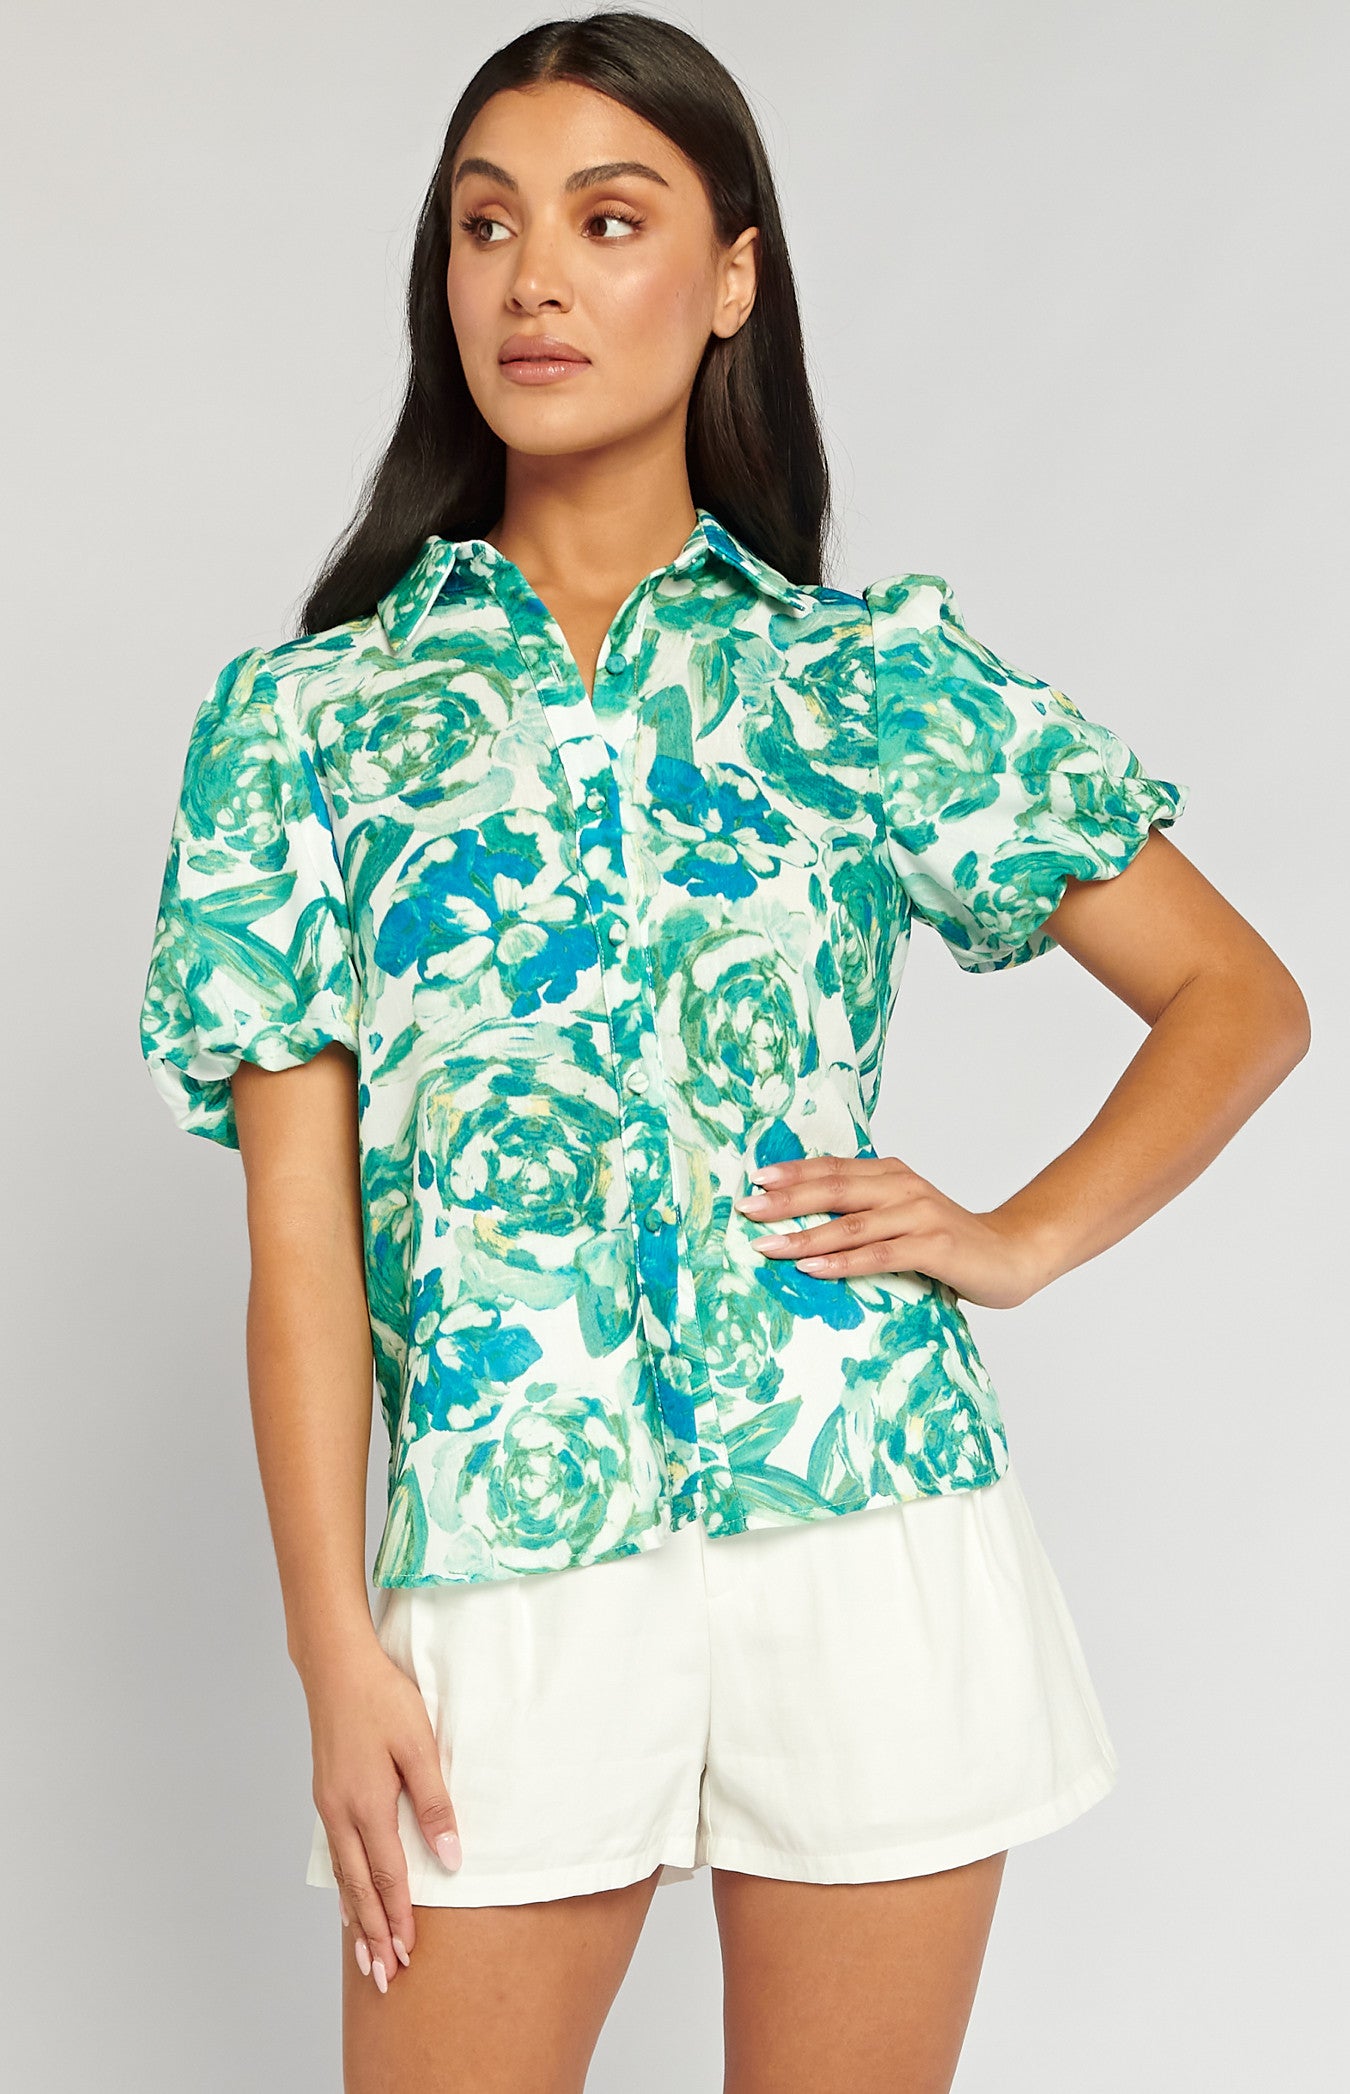 Floral Printed Sheer Chiffon Shirt with Ruffle Details (STO654B)